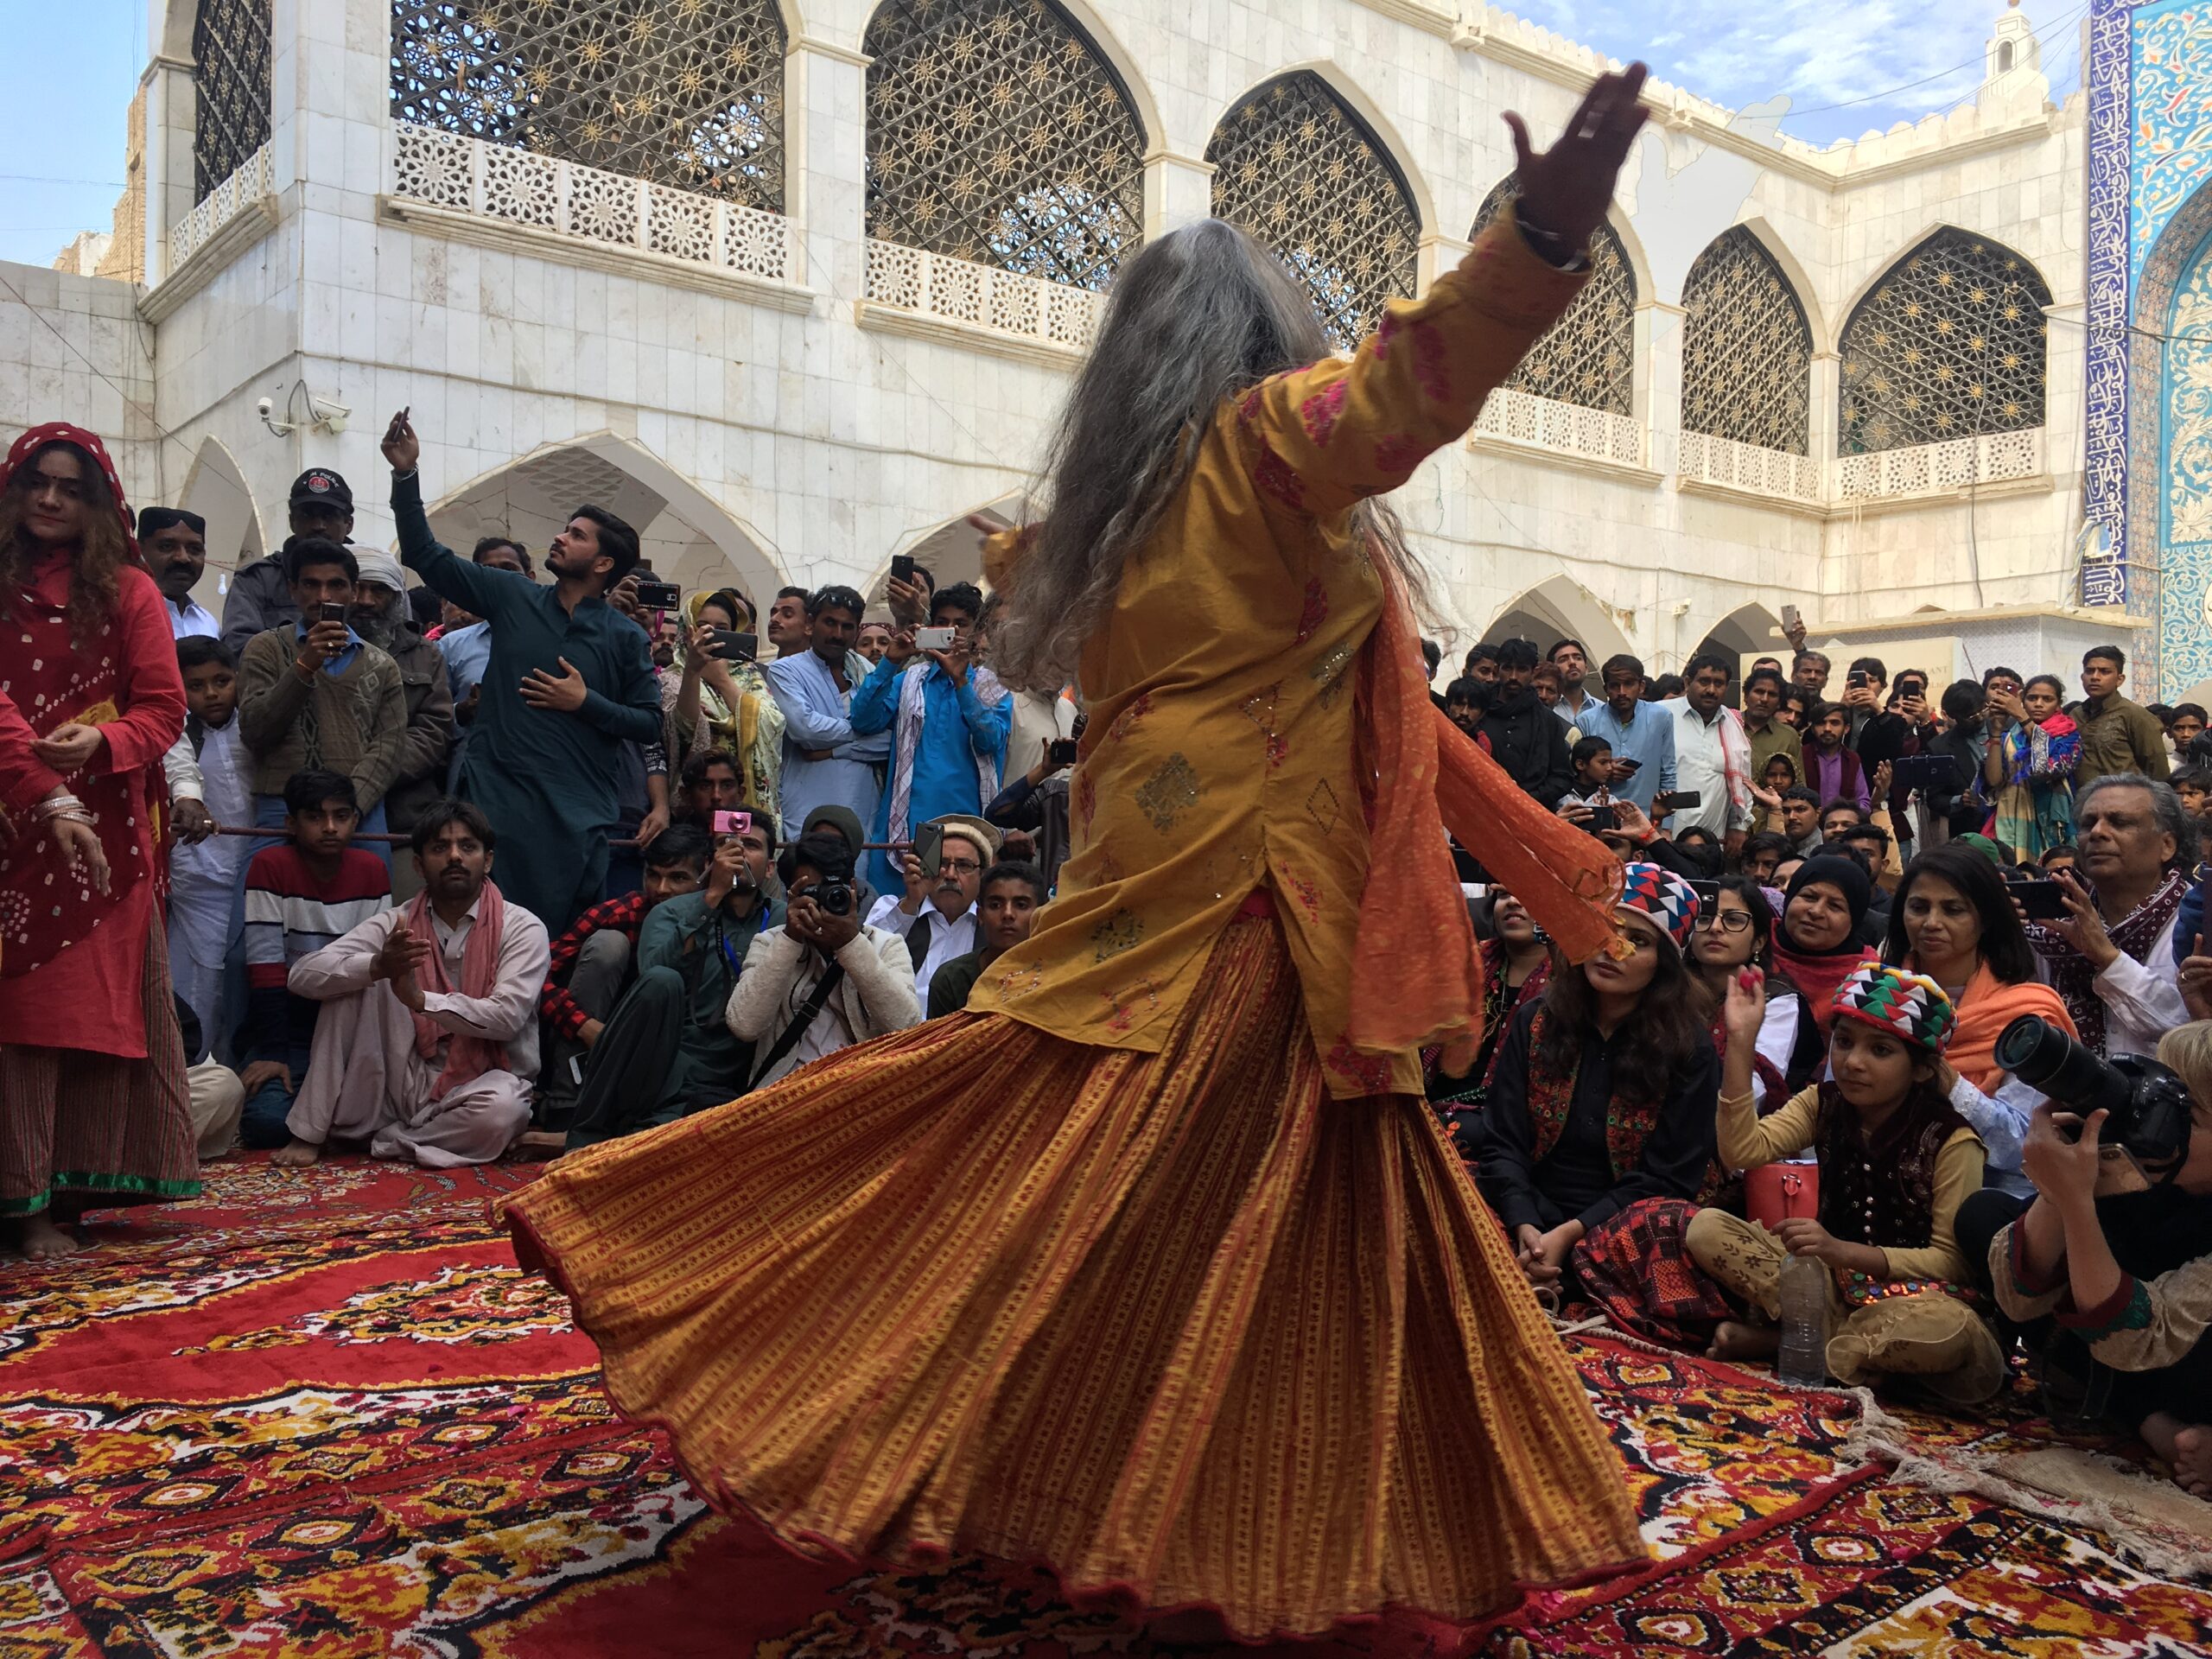 eminist activist artist Sheema Kermani performing in the Sufi shrine of Lal Shahbaz Qalandar in Sindh, Pakistan, 2019